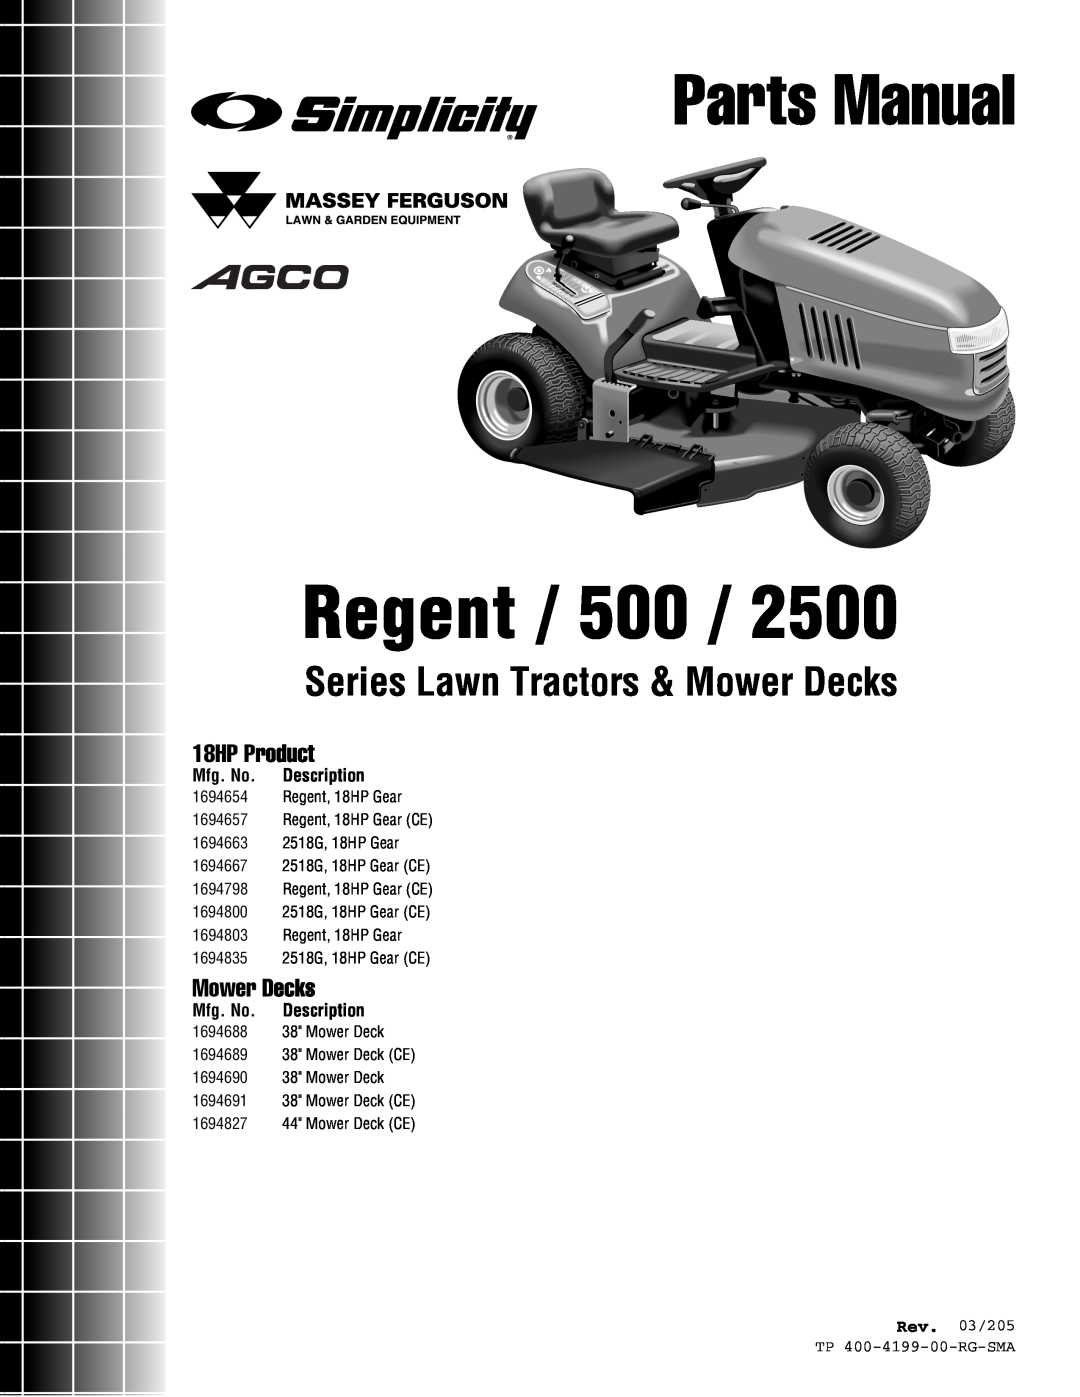 Snapper 2500 Series manual Parts Manual, Regent, Series Lawn Tractors & Mower Decks, 18HP Product 